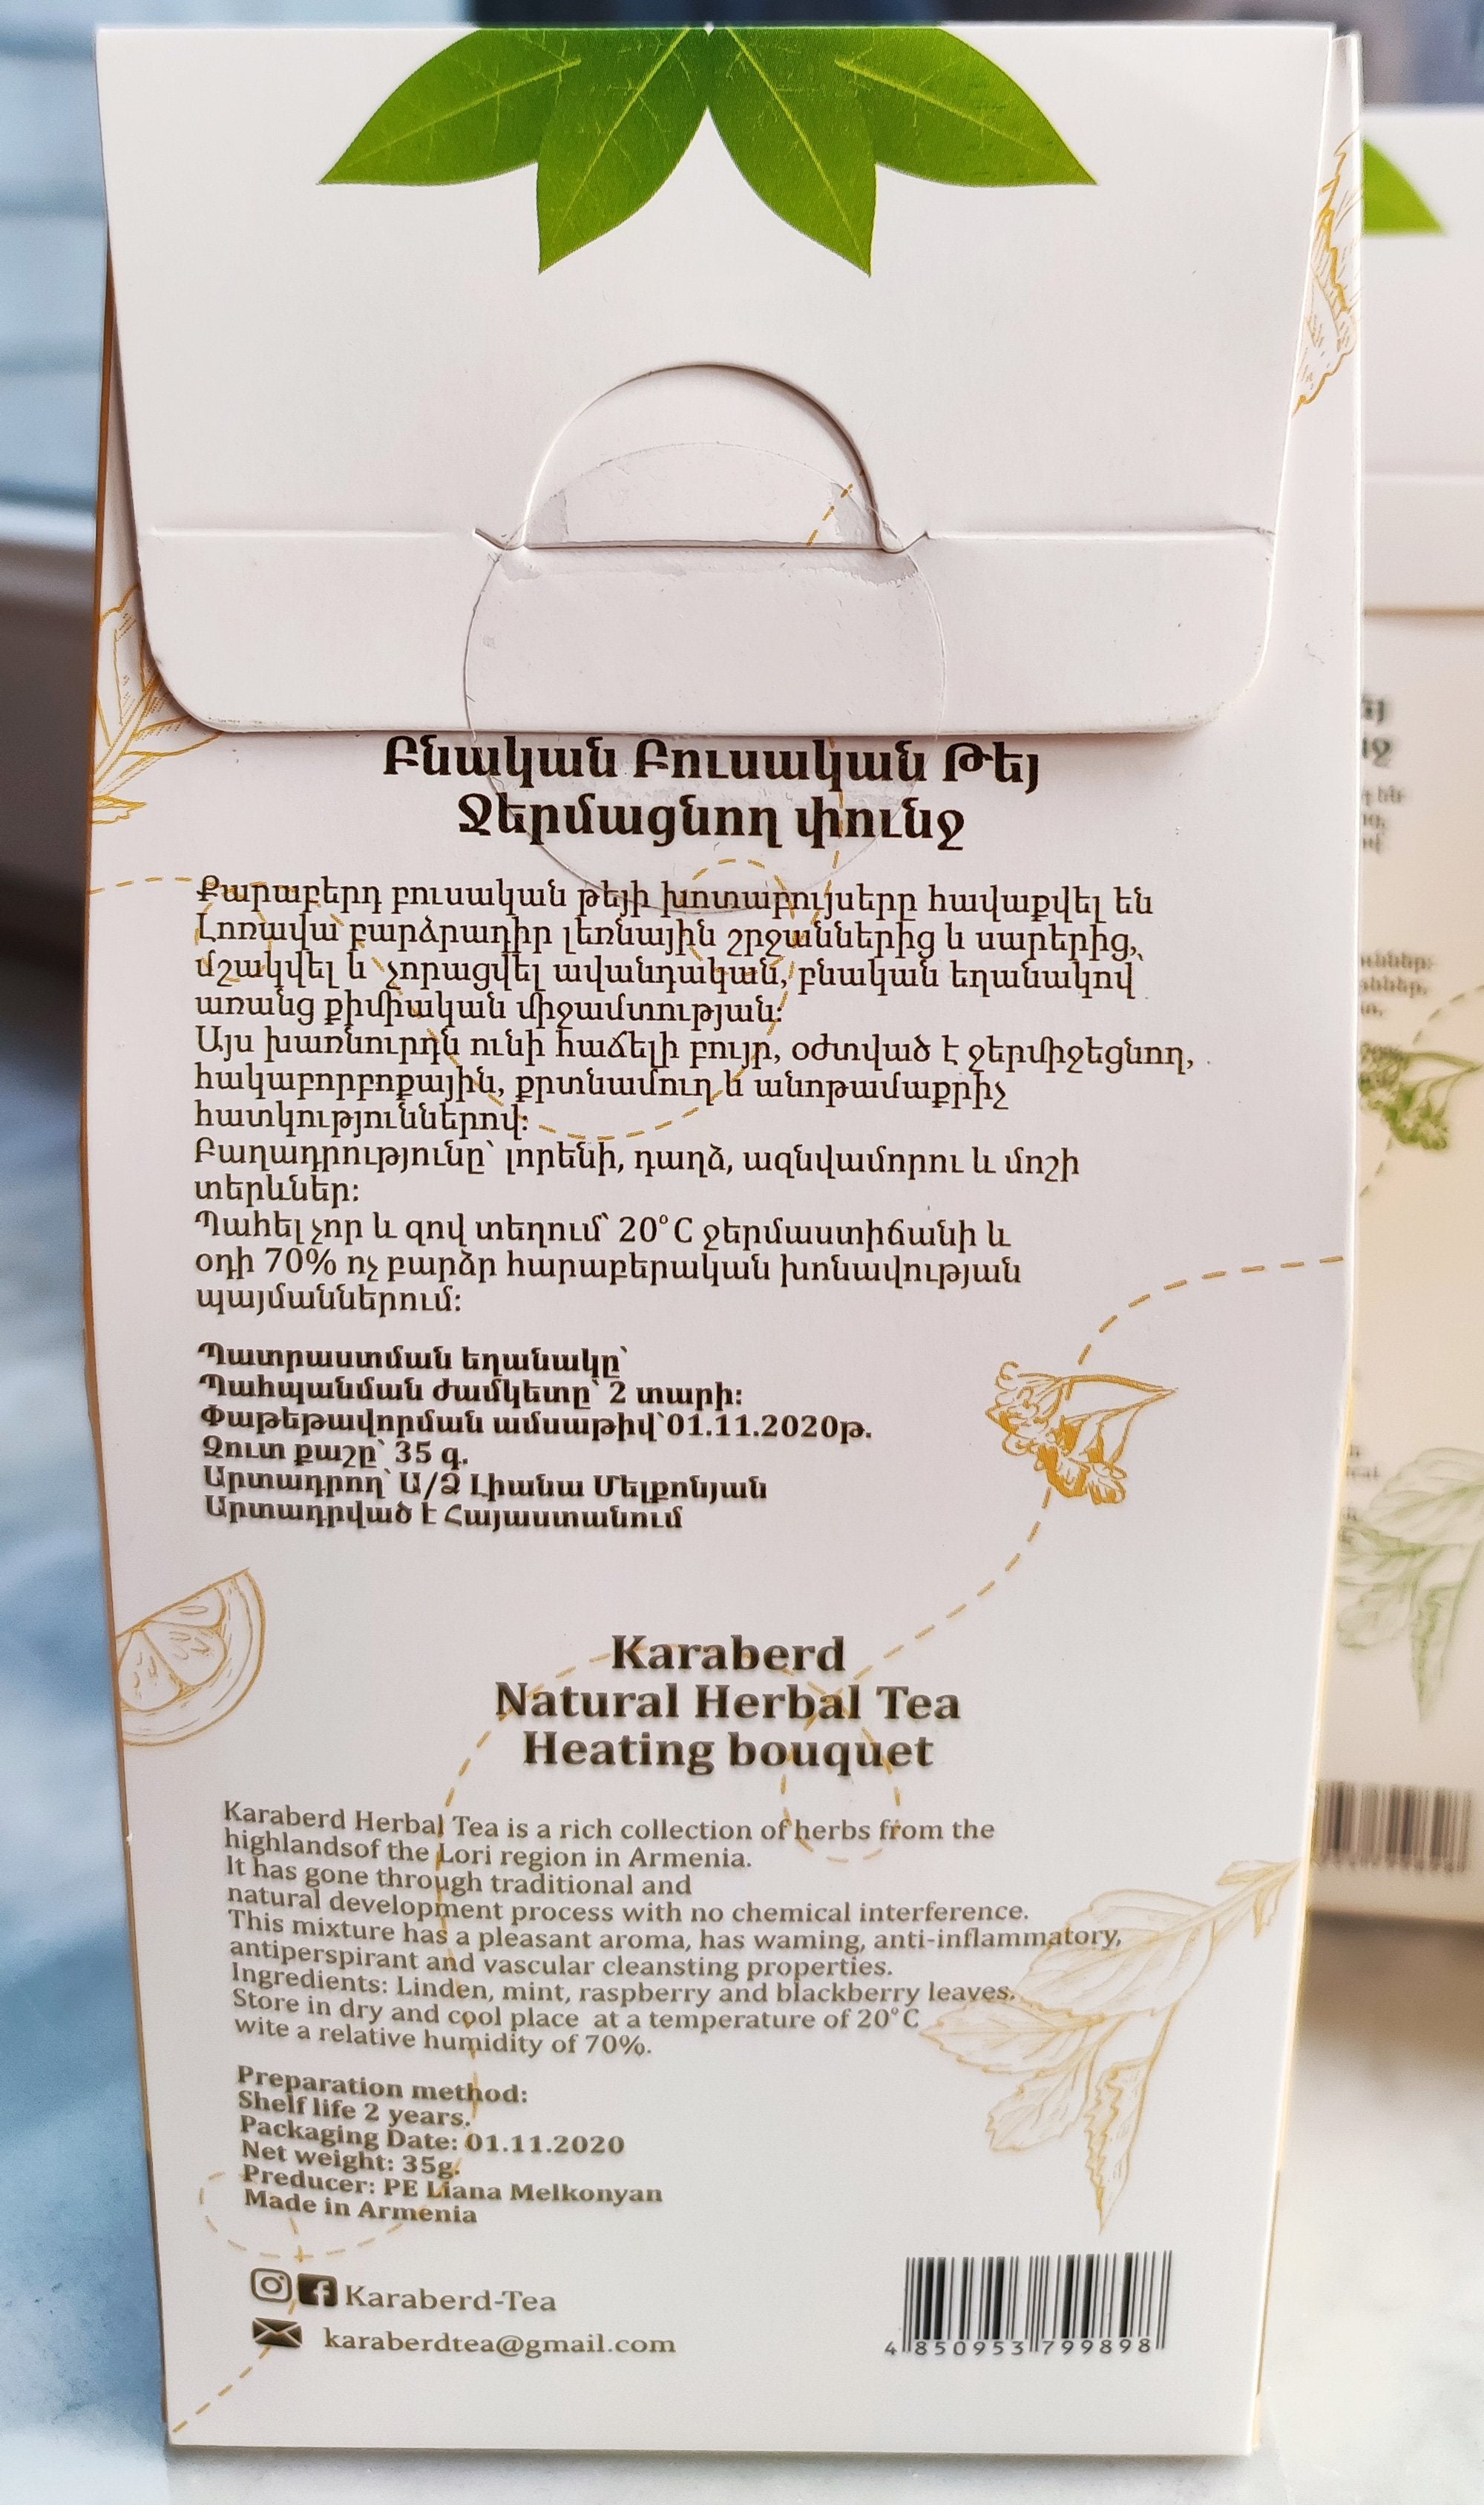 Karaberd Herbal Tea - Heating Bouquet - Linden, Mint, Raspberry and Blackberry Leaves